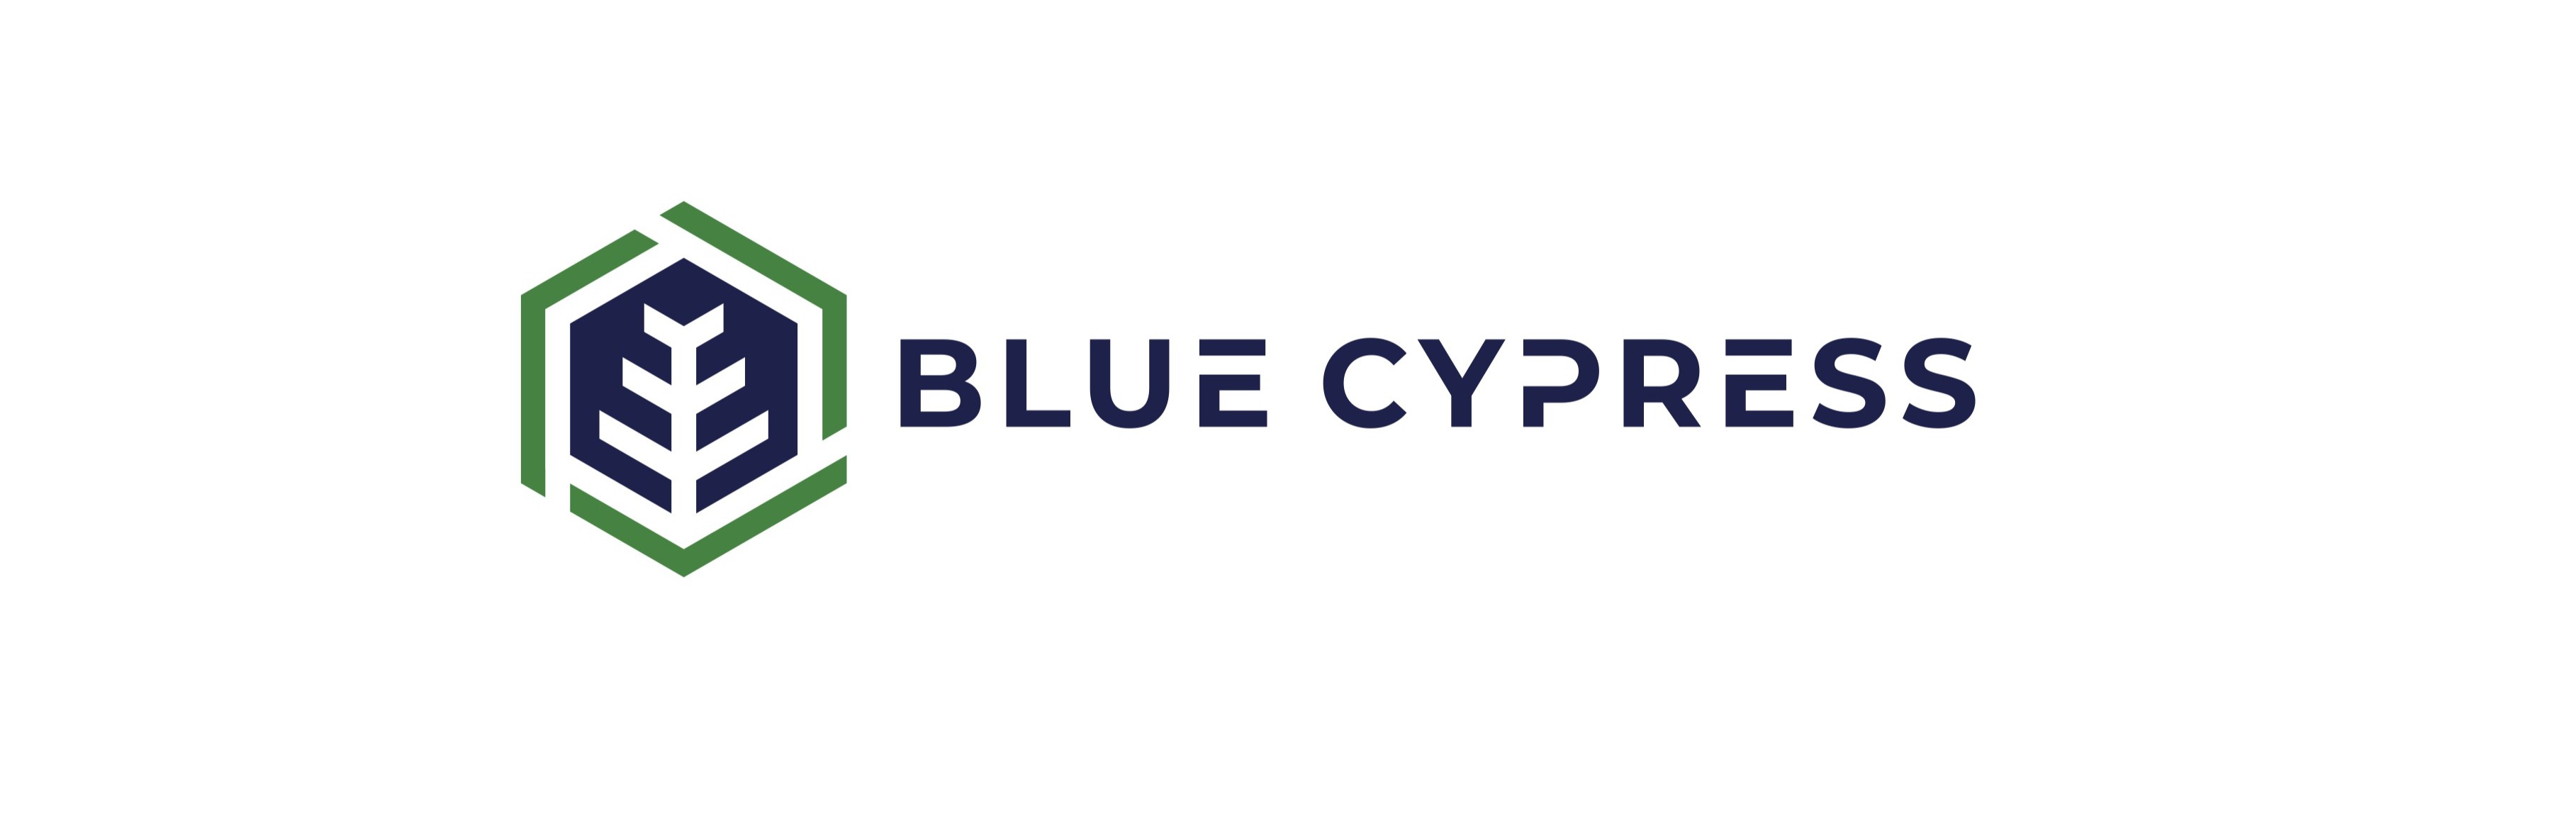 blue cypress banner-1